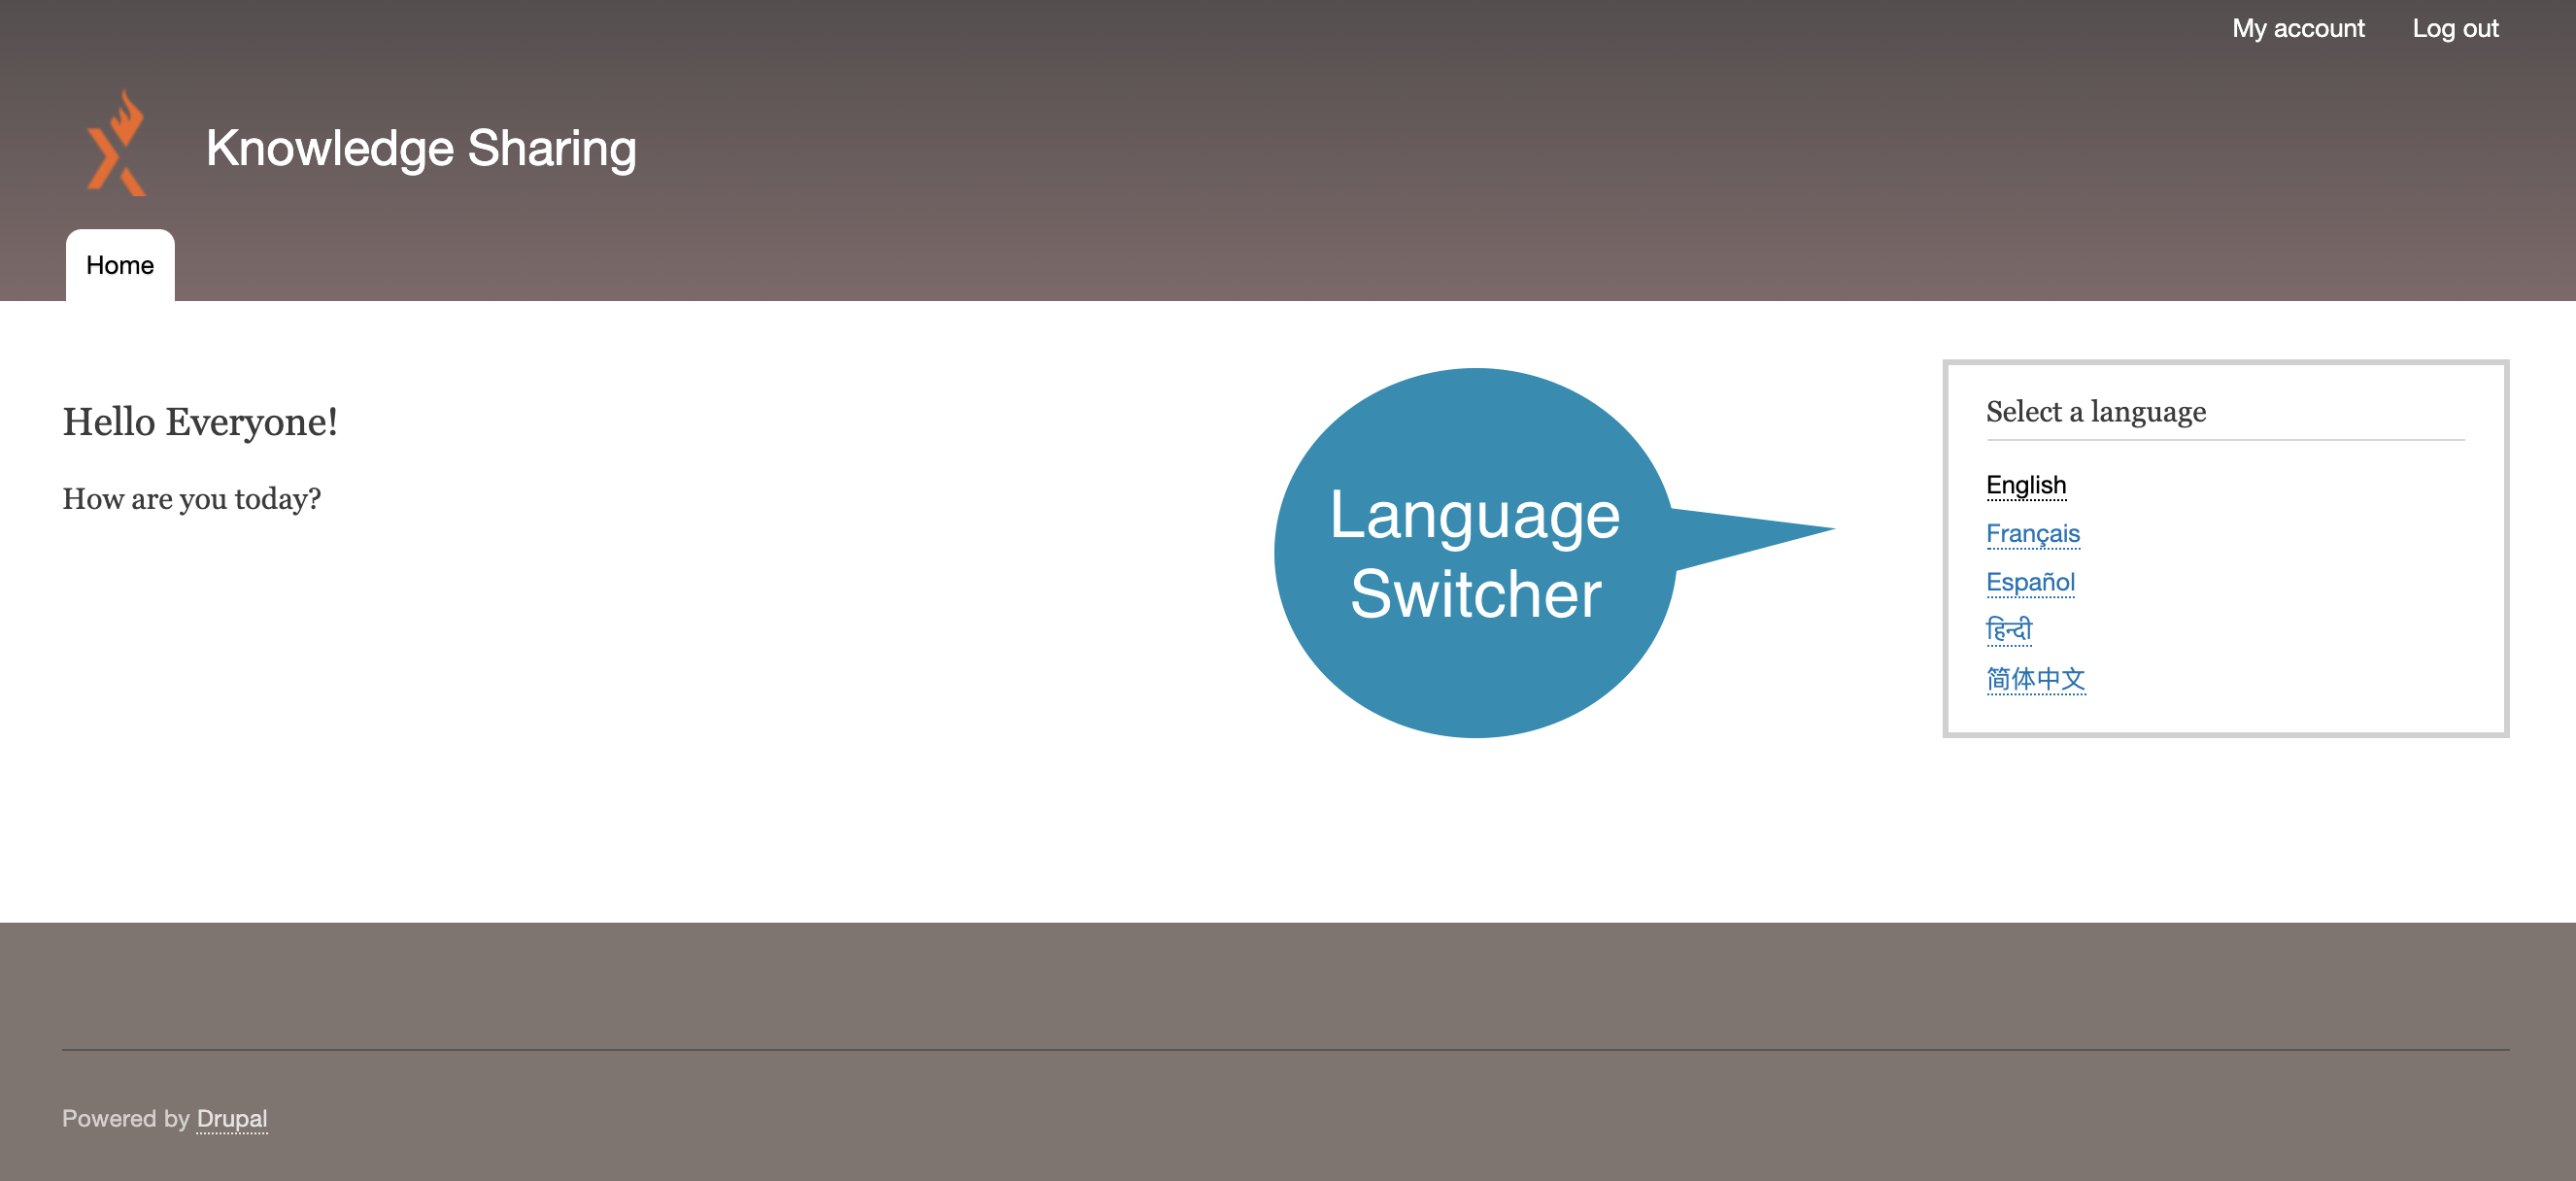 Knowledge sharing - Language switcher listing